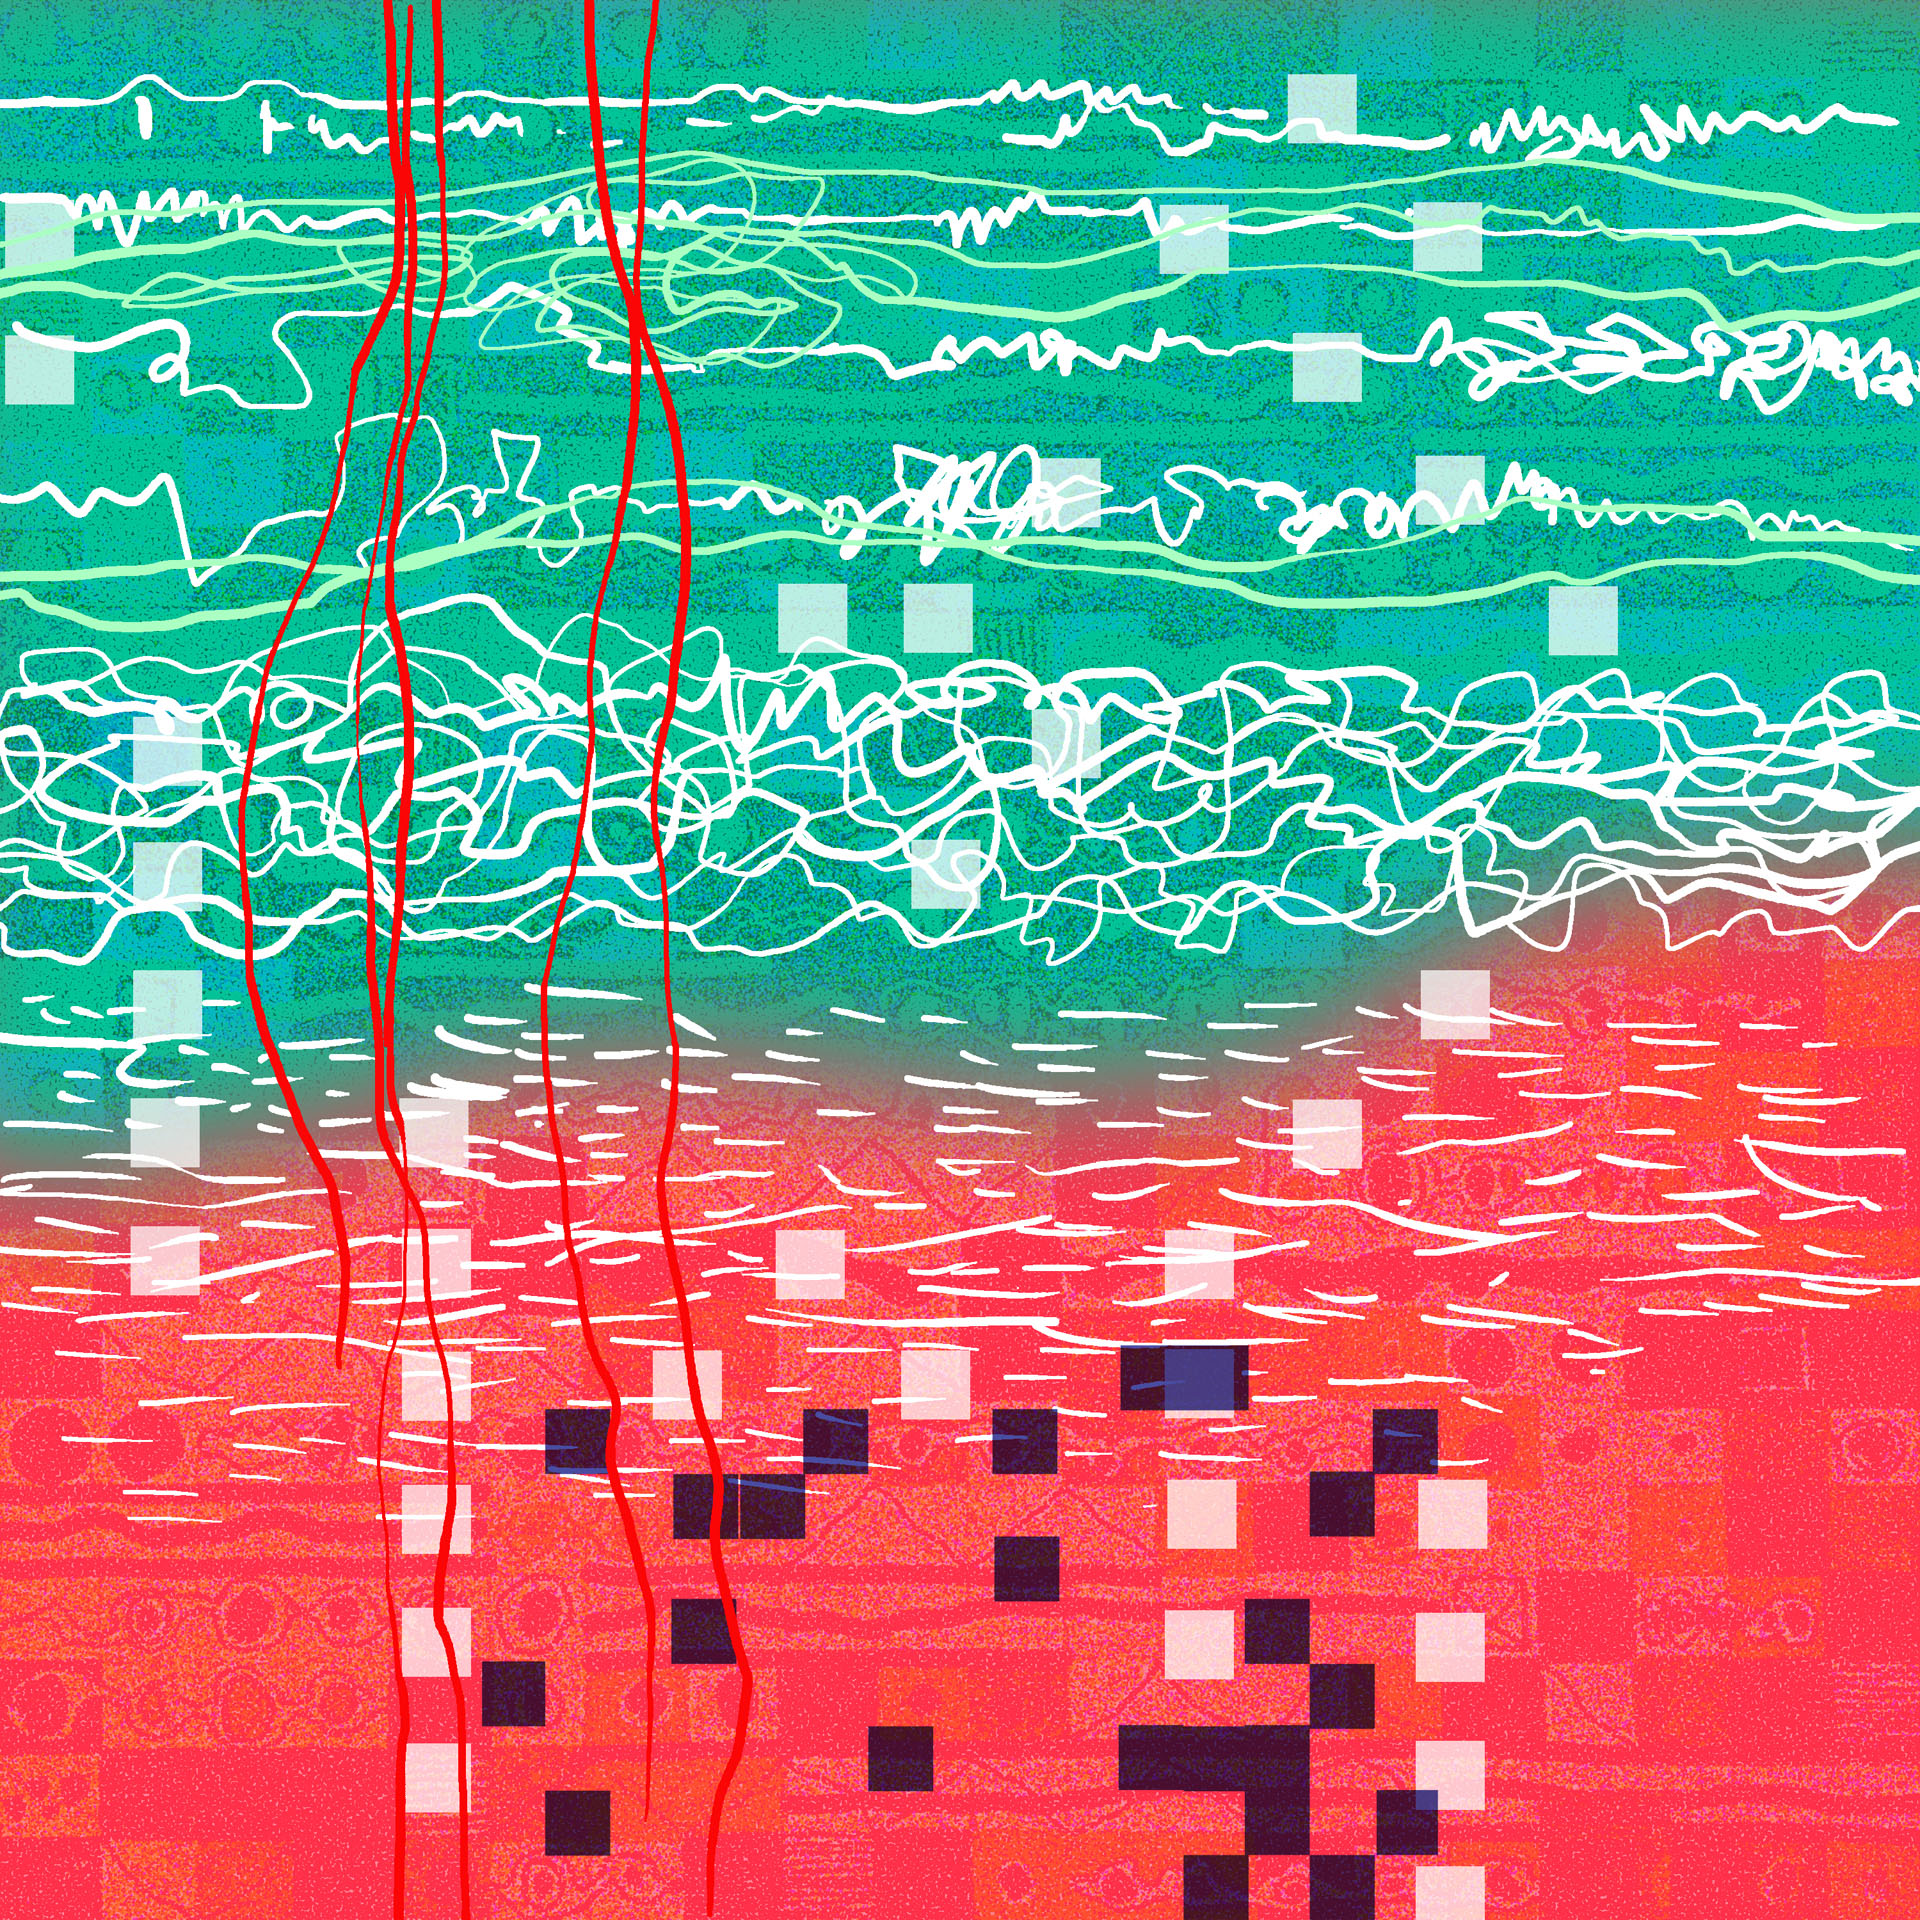 SURRENDER DOROTHY-1_Ode to the birds-Negin, 2020. Roz Dimon & Negin Ehtesabian. Collaborative digital artwork, 3000 x 3000 pixels.